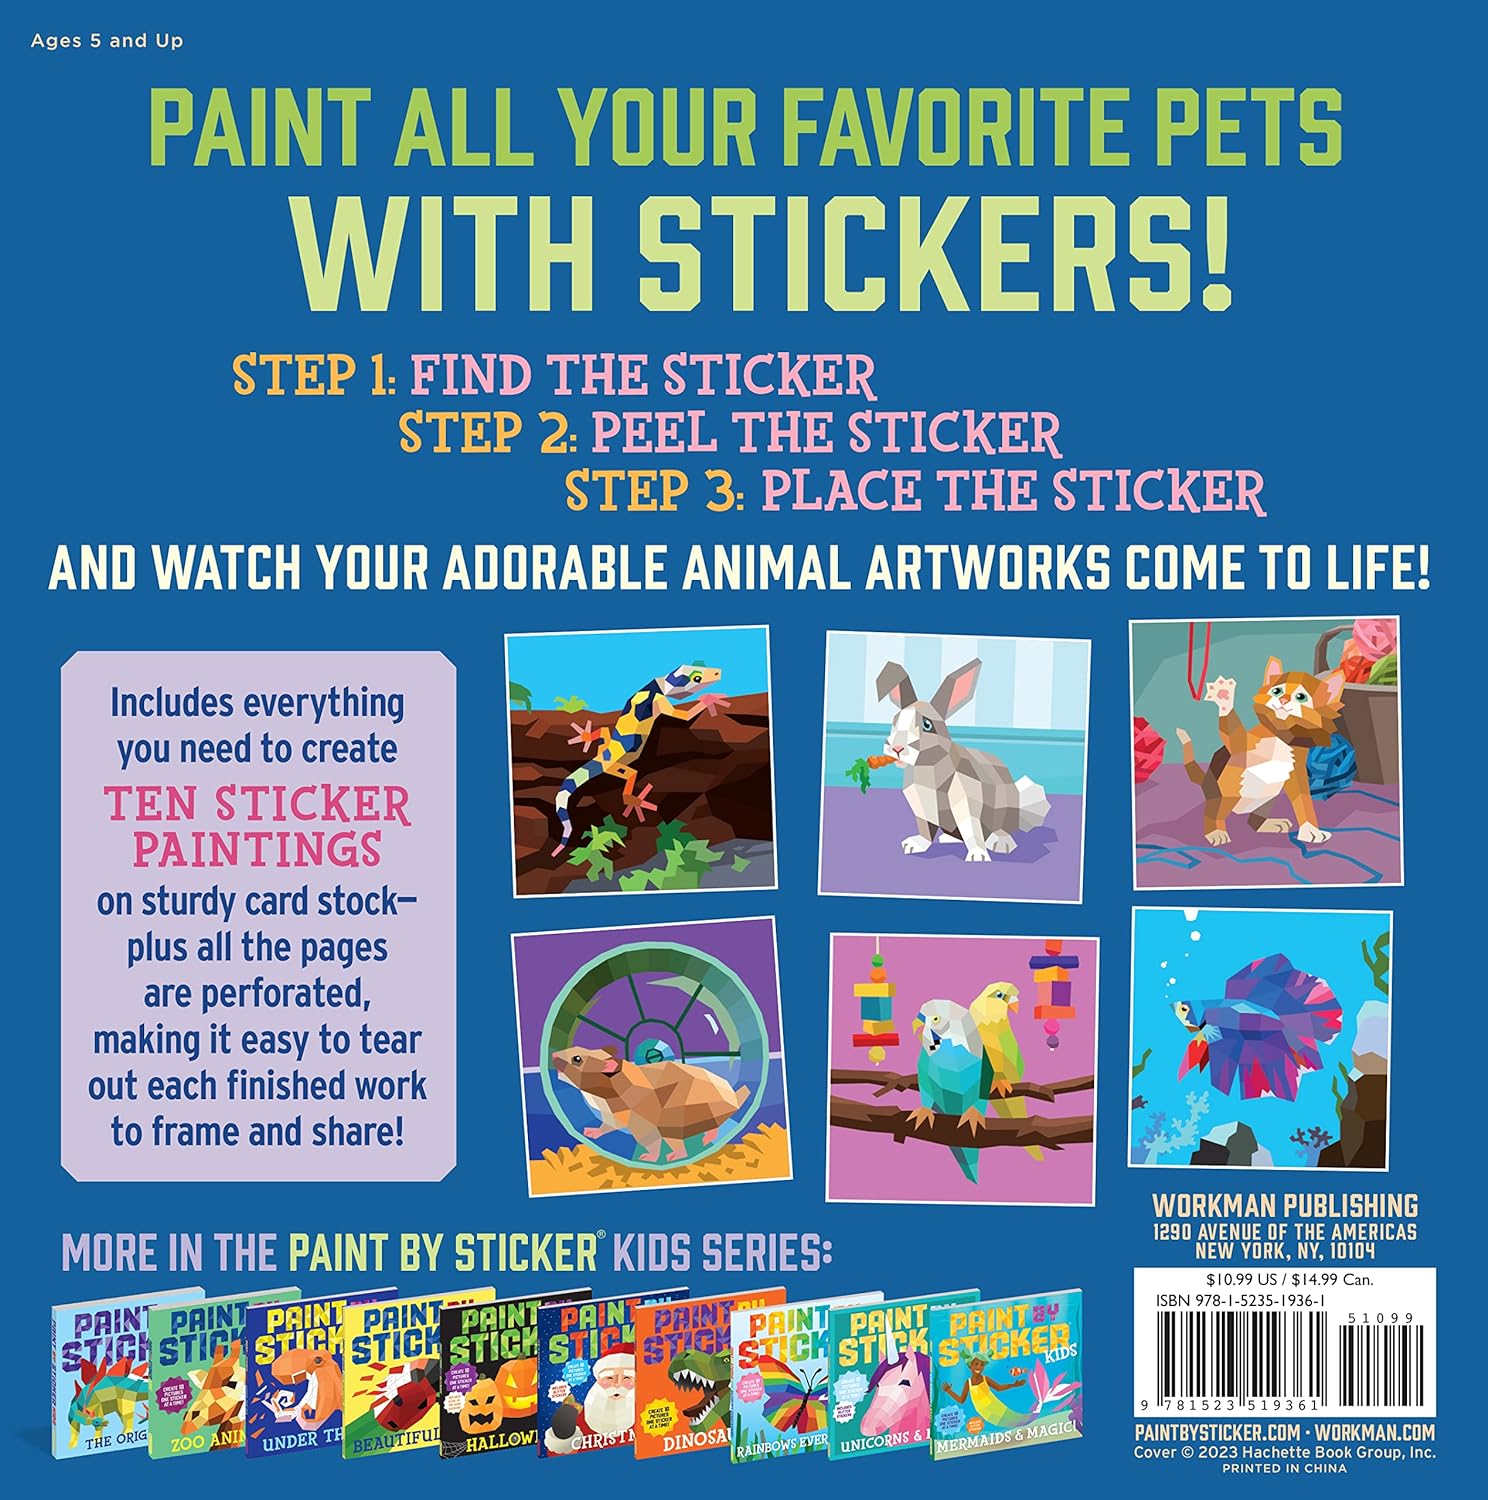 Paint by Sticker Kids - Pets